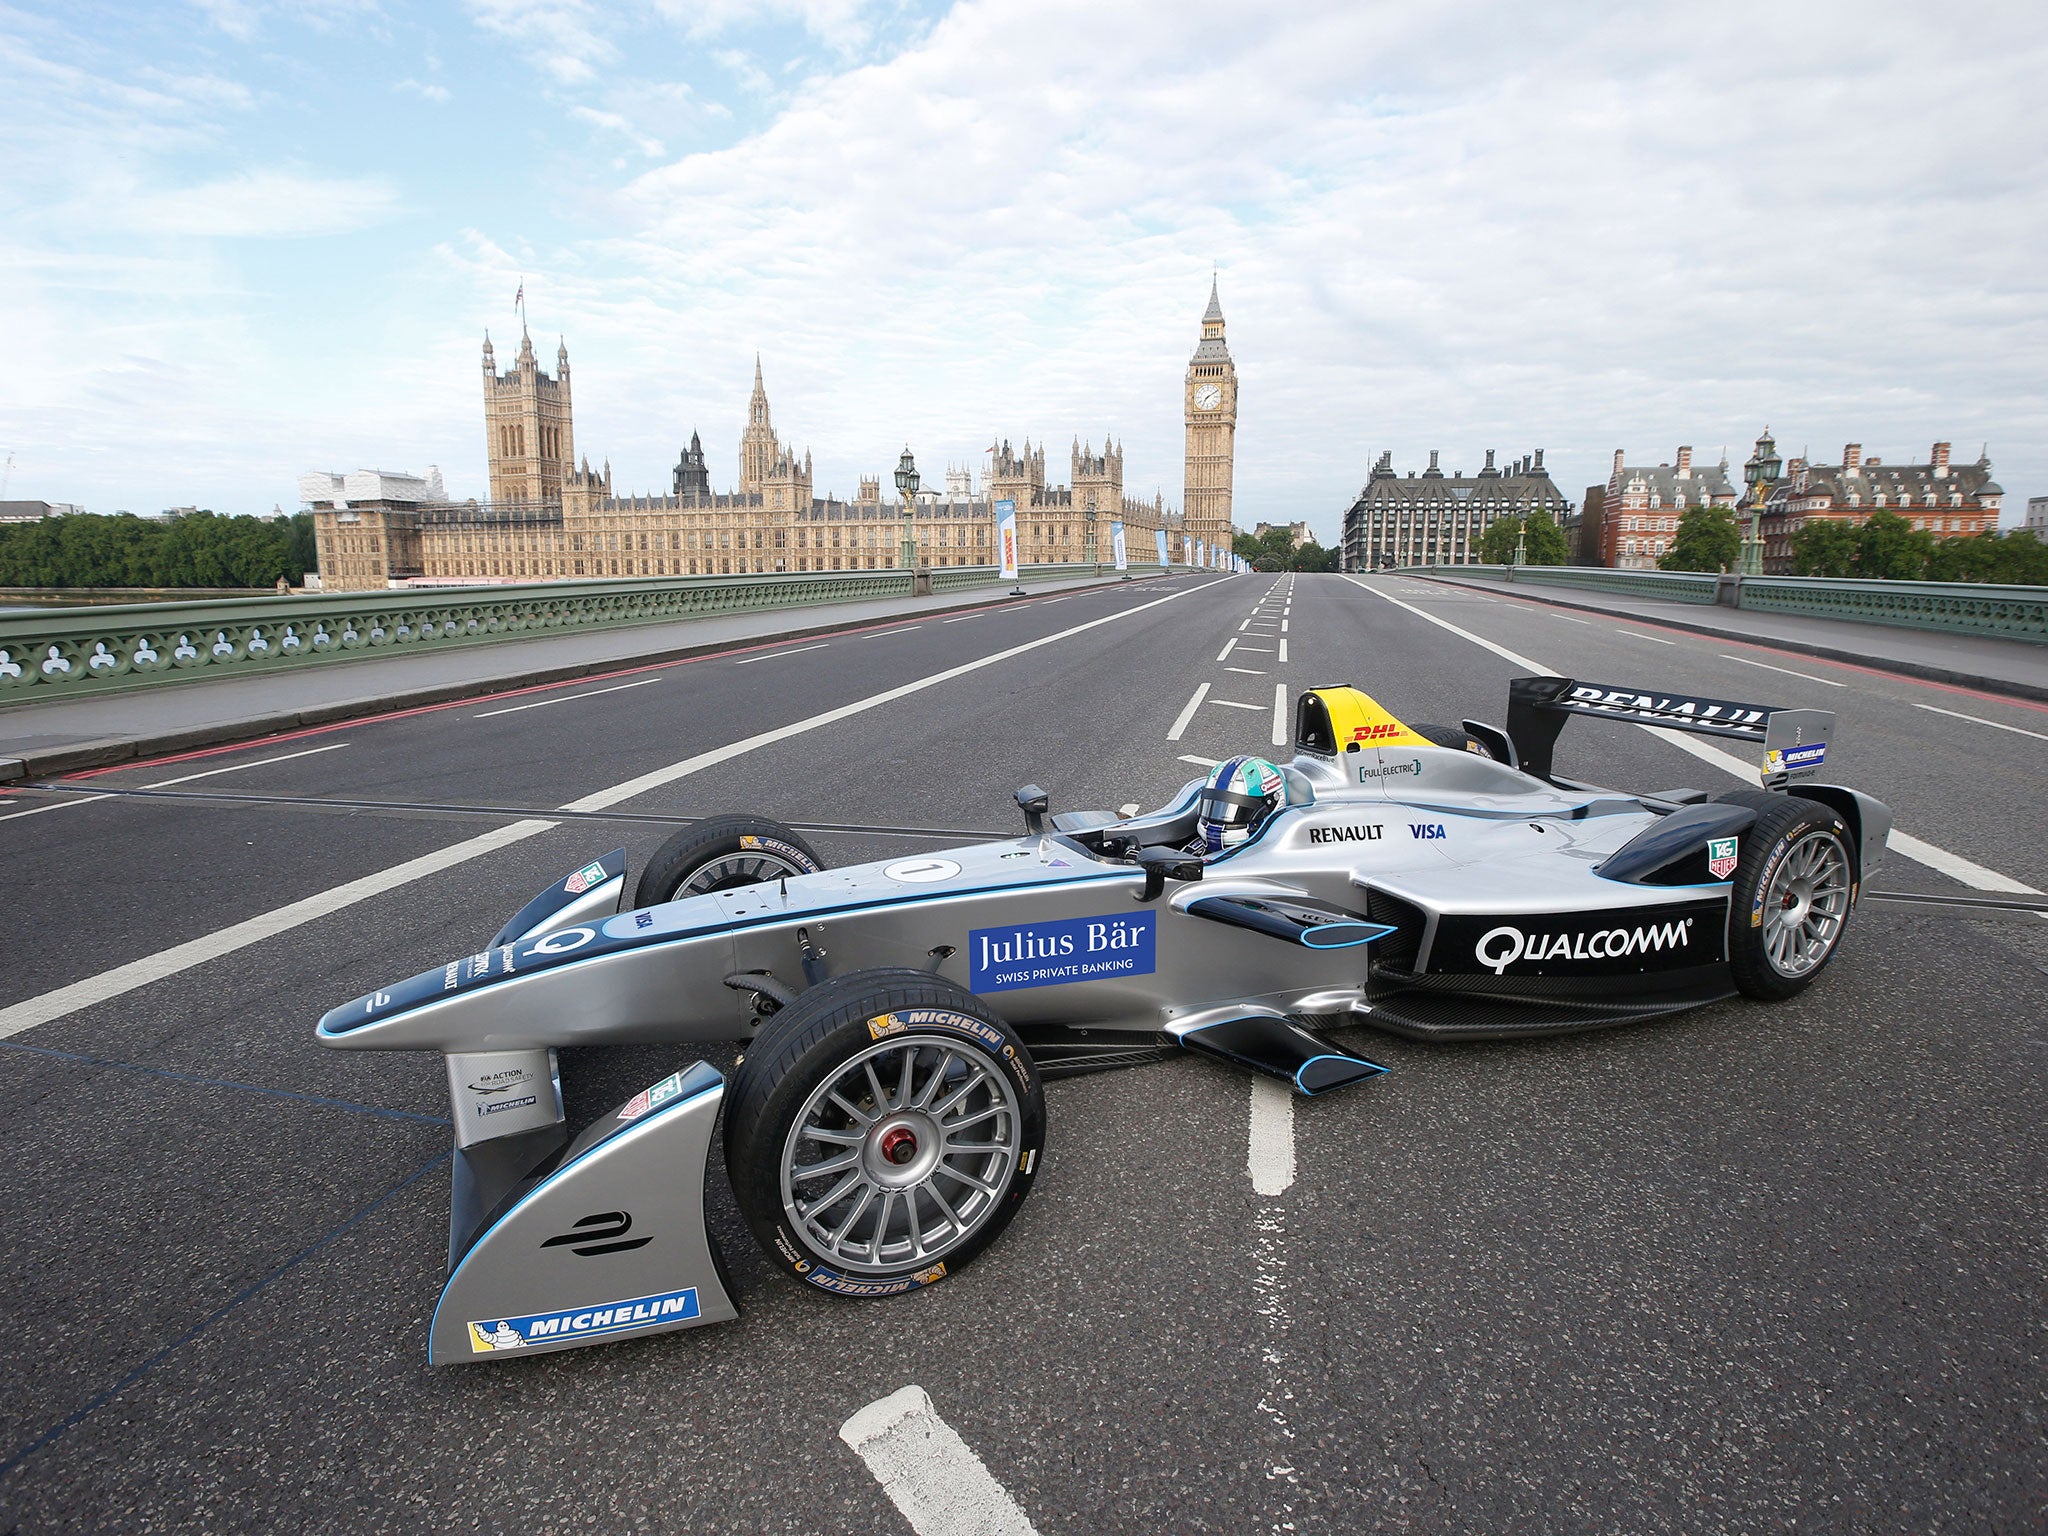 The 2015 Formula E season finale takes place in Battersea Park, London